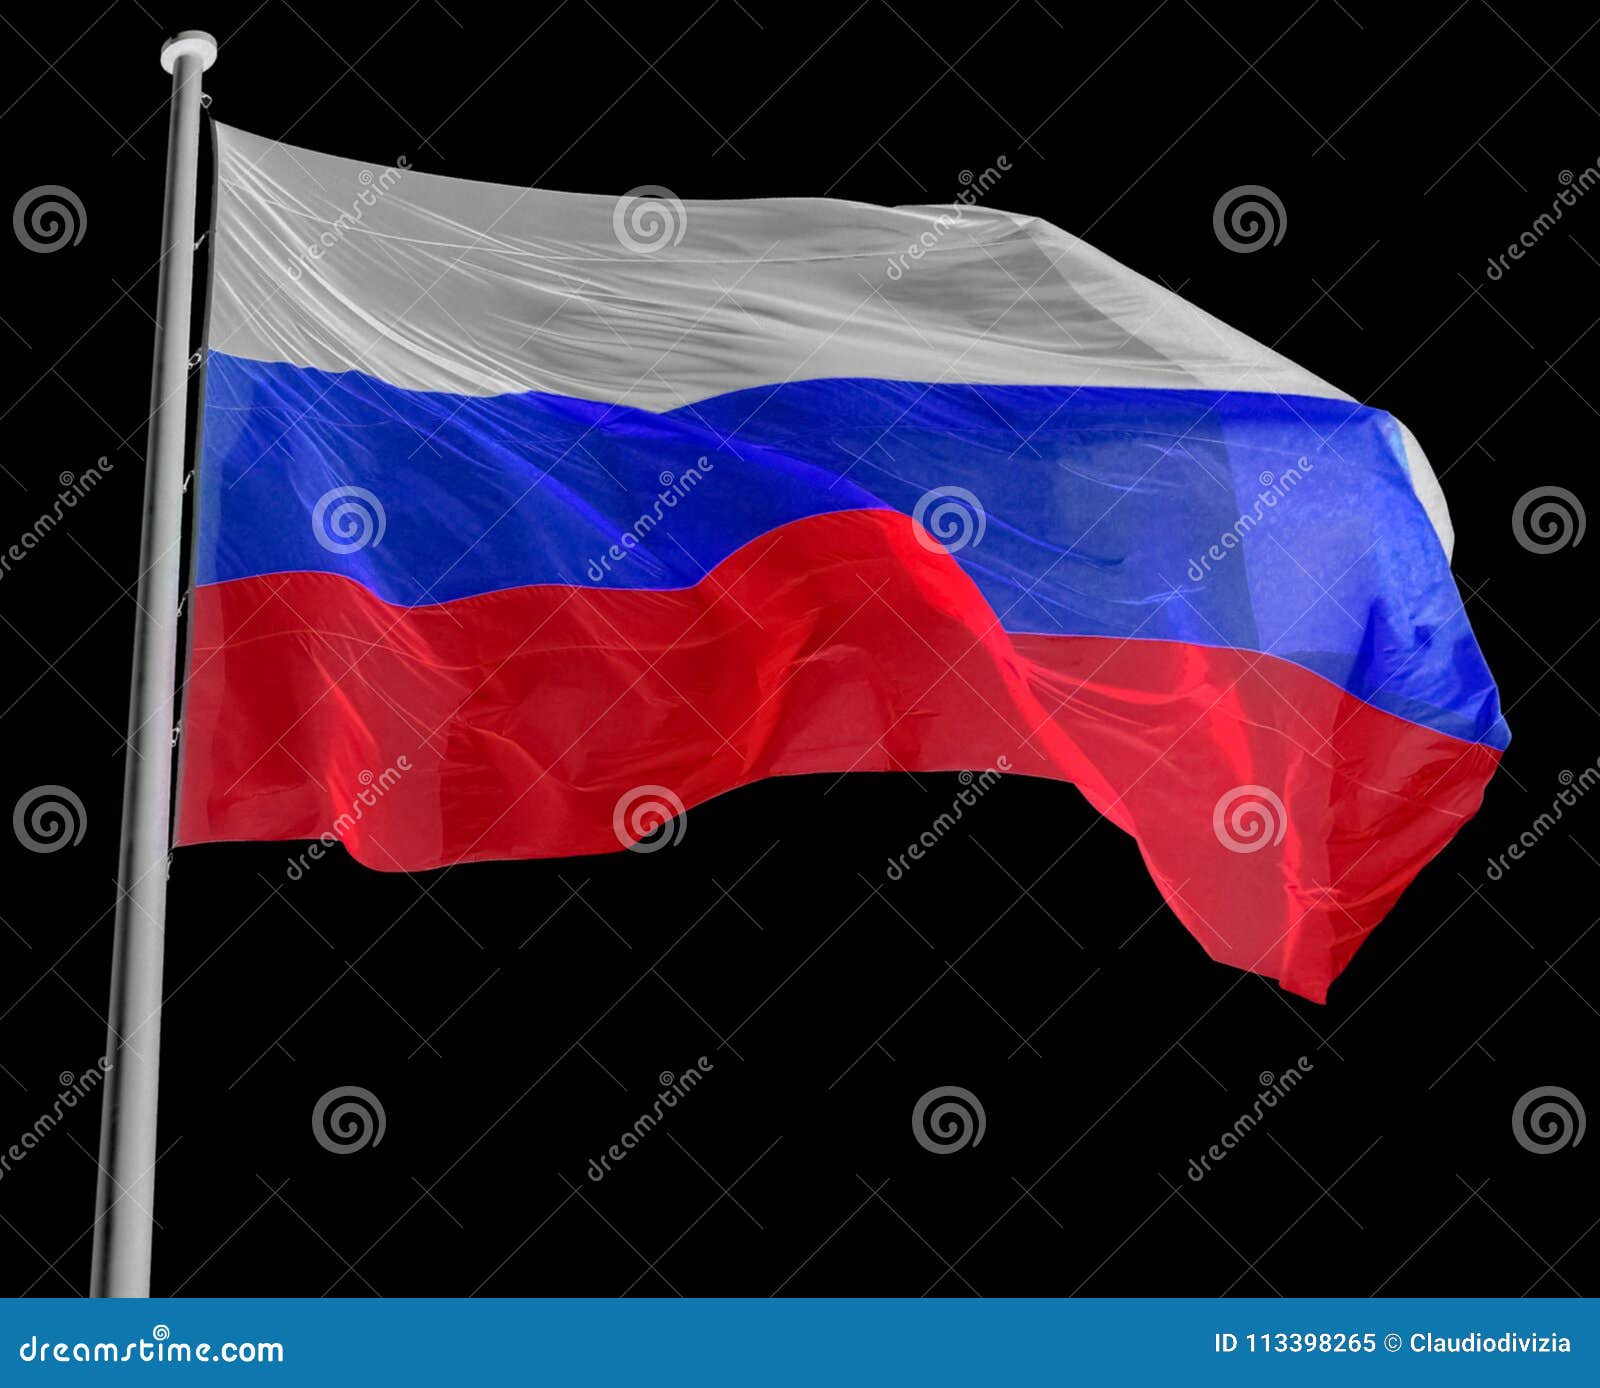 Russland flagge Stockfotos, lizenzfreie Russland flagge Bilder